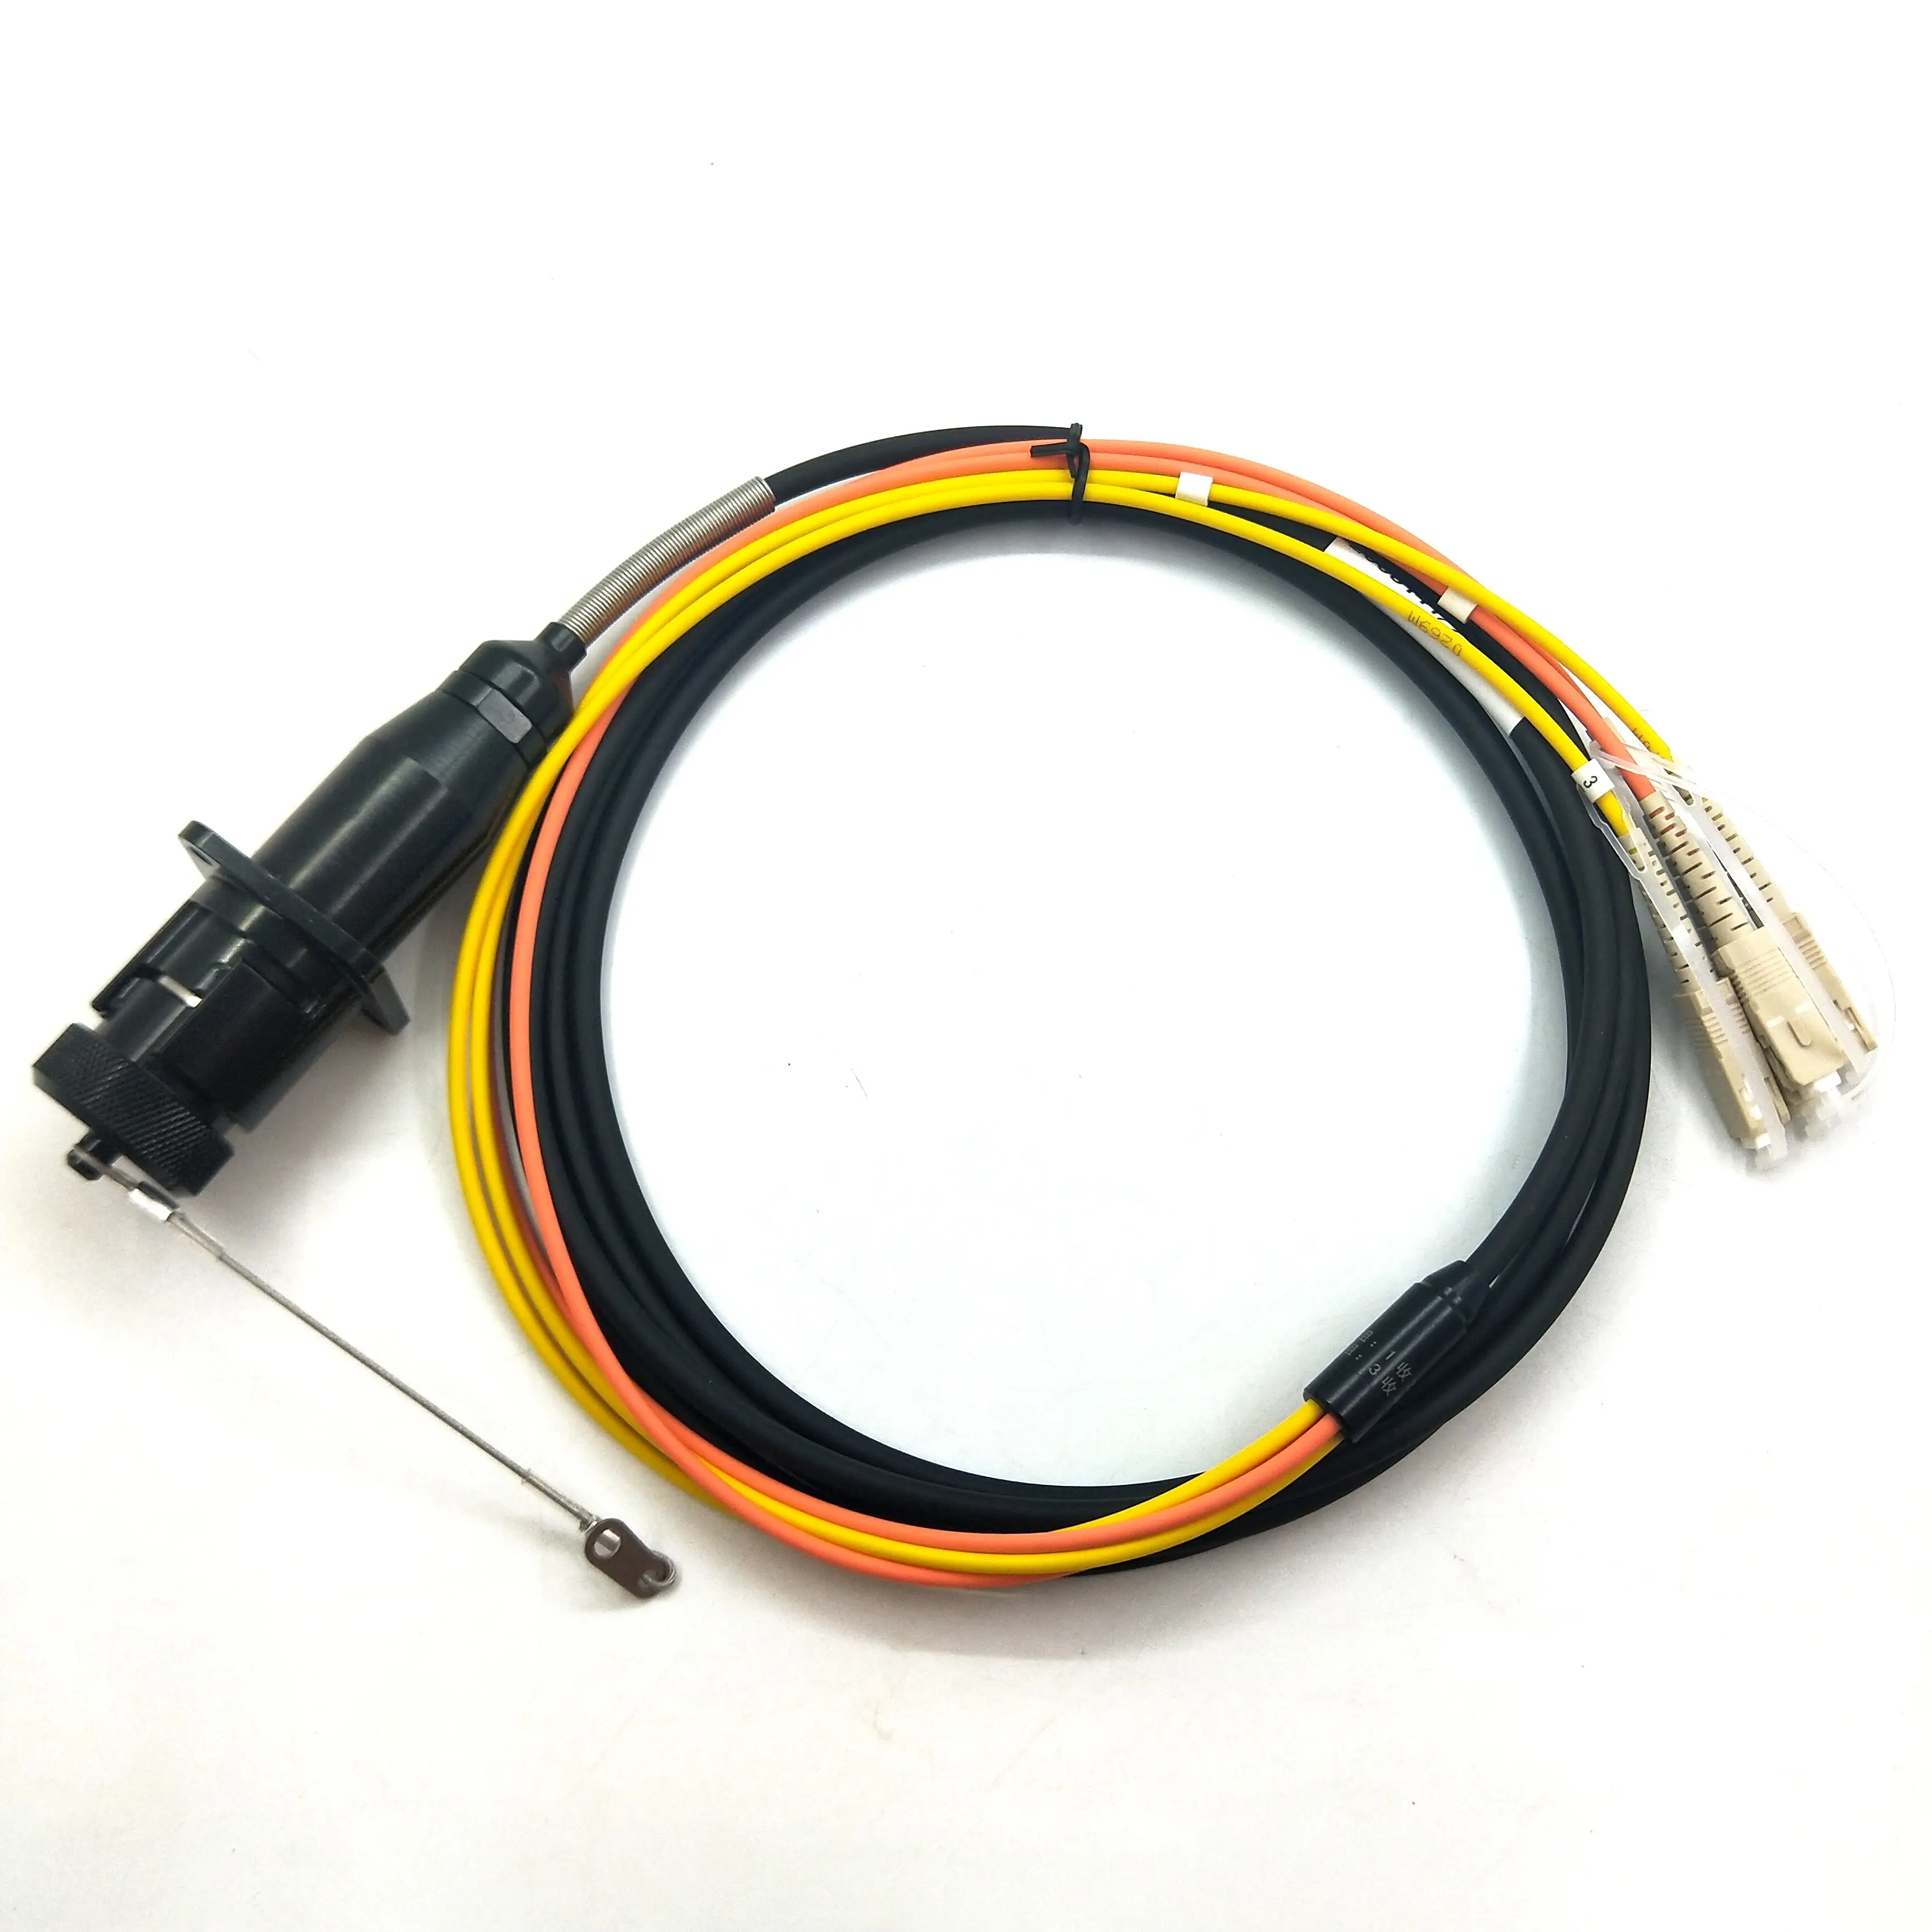 YZCEB konektor kabel serat balok diperluas luar ruangan menggunakan rakitan kabel